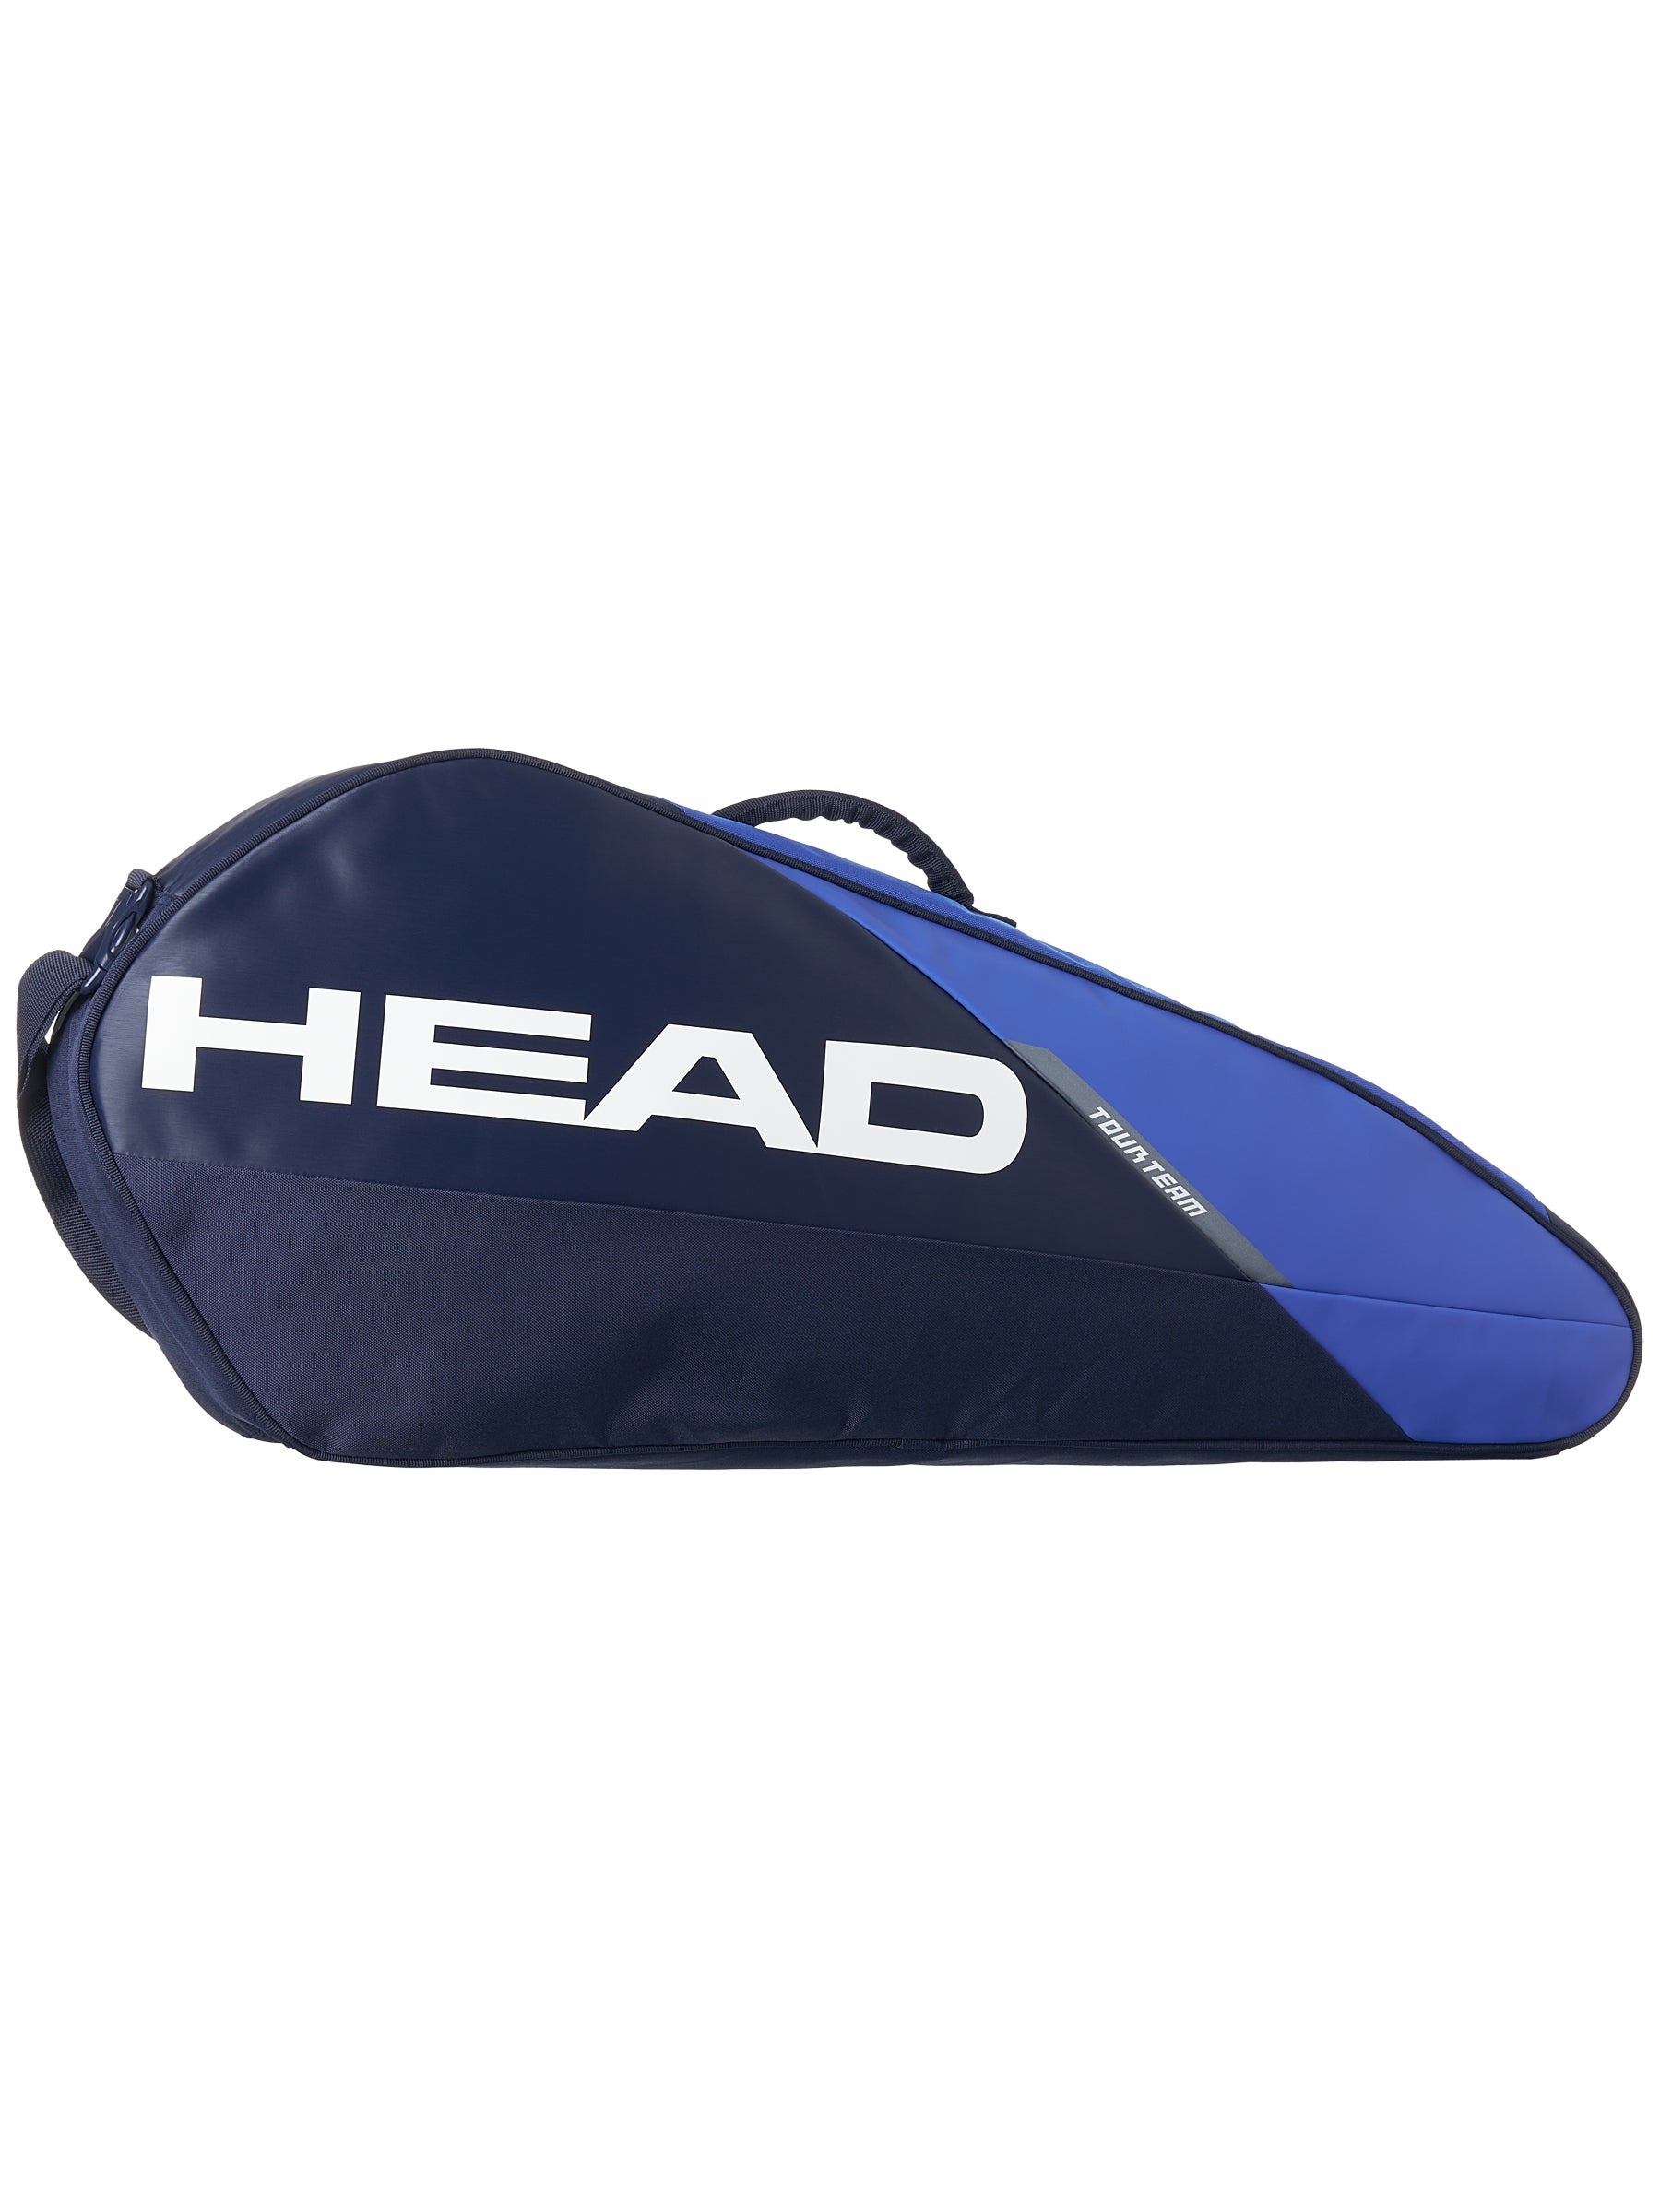 Head Tour Team Combi Tennistasche Tennis Bag 